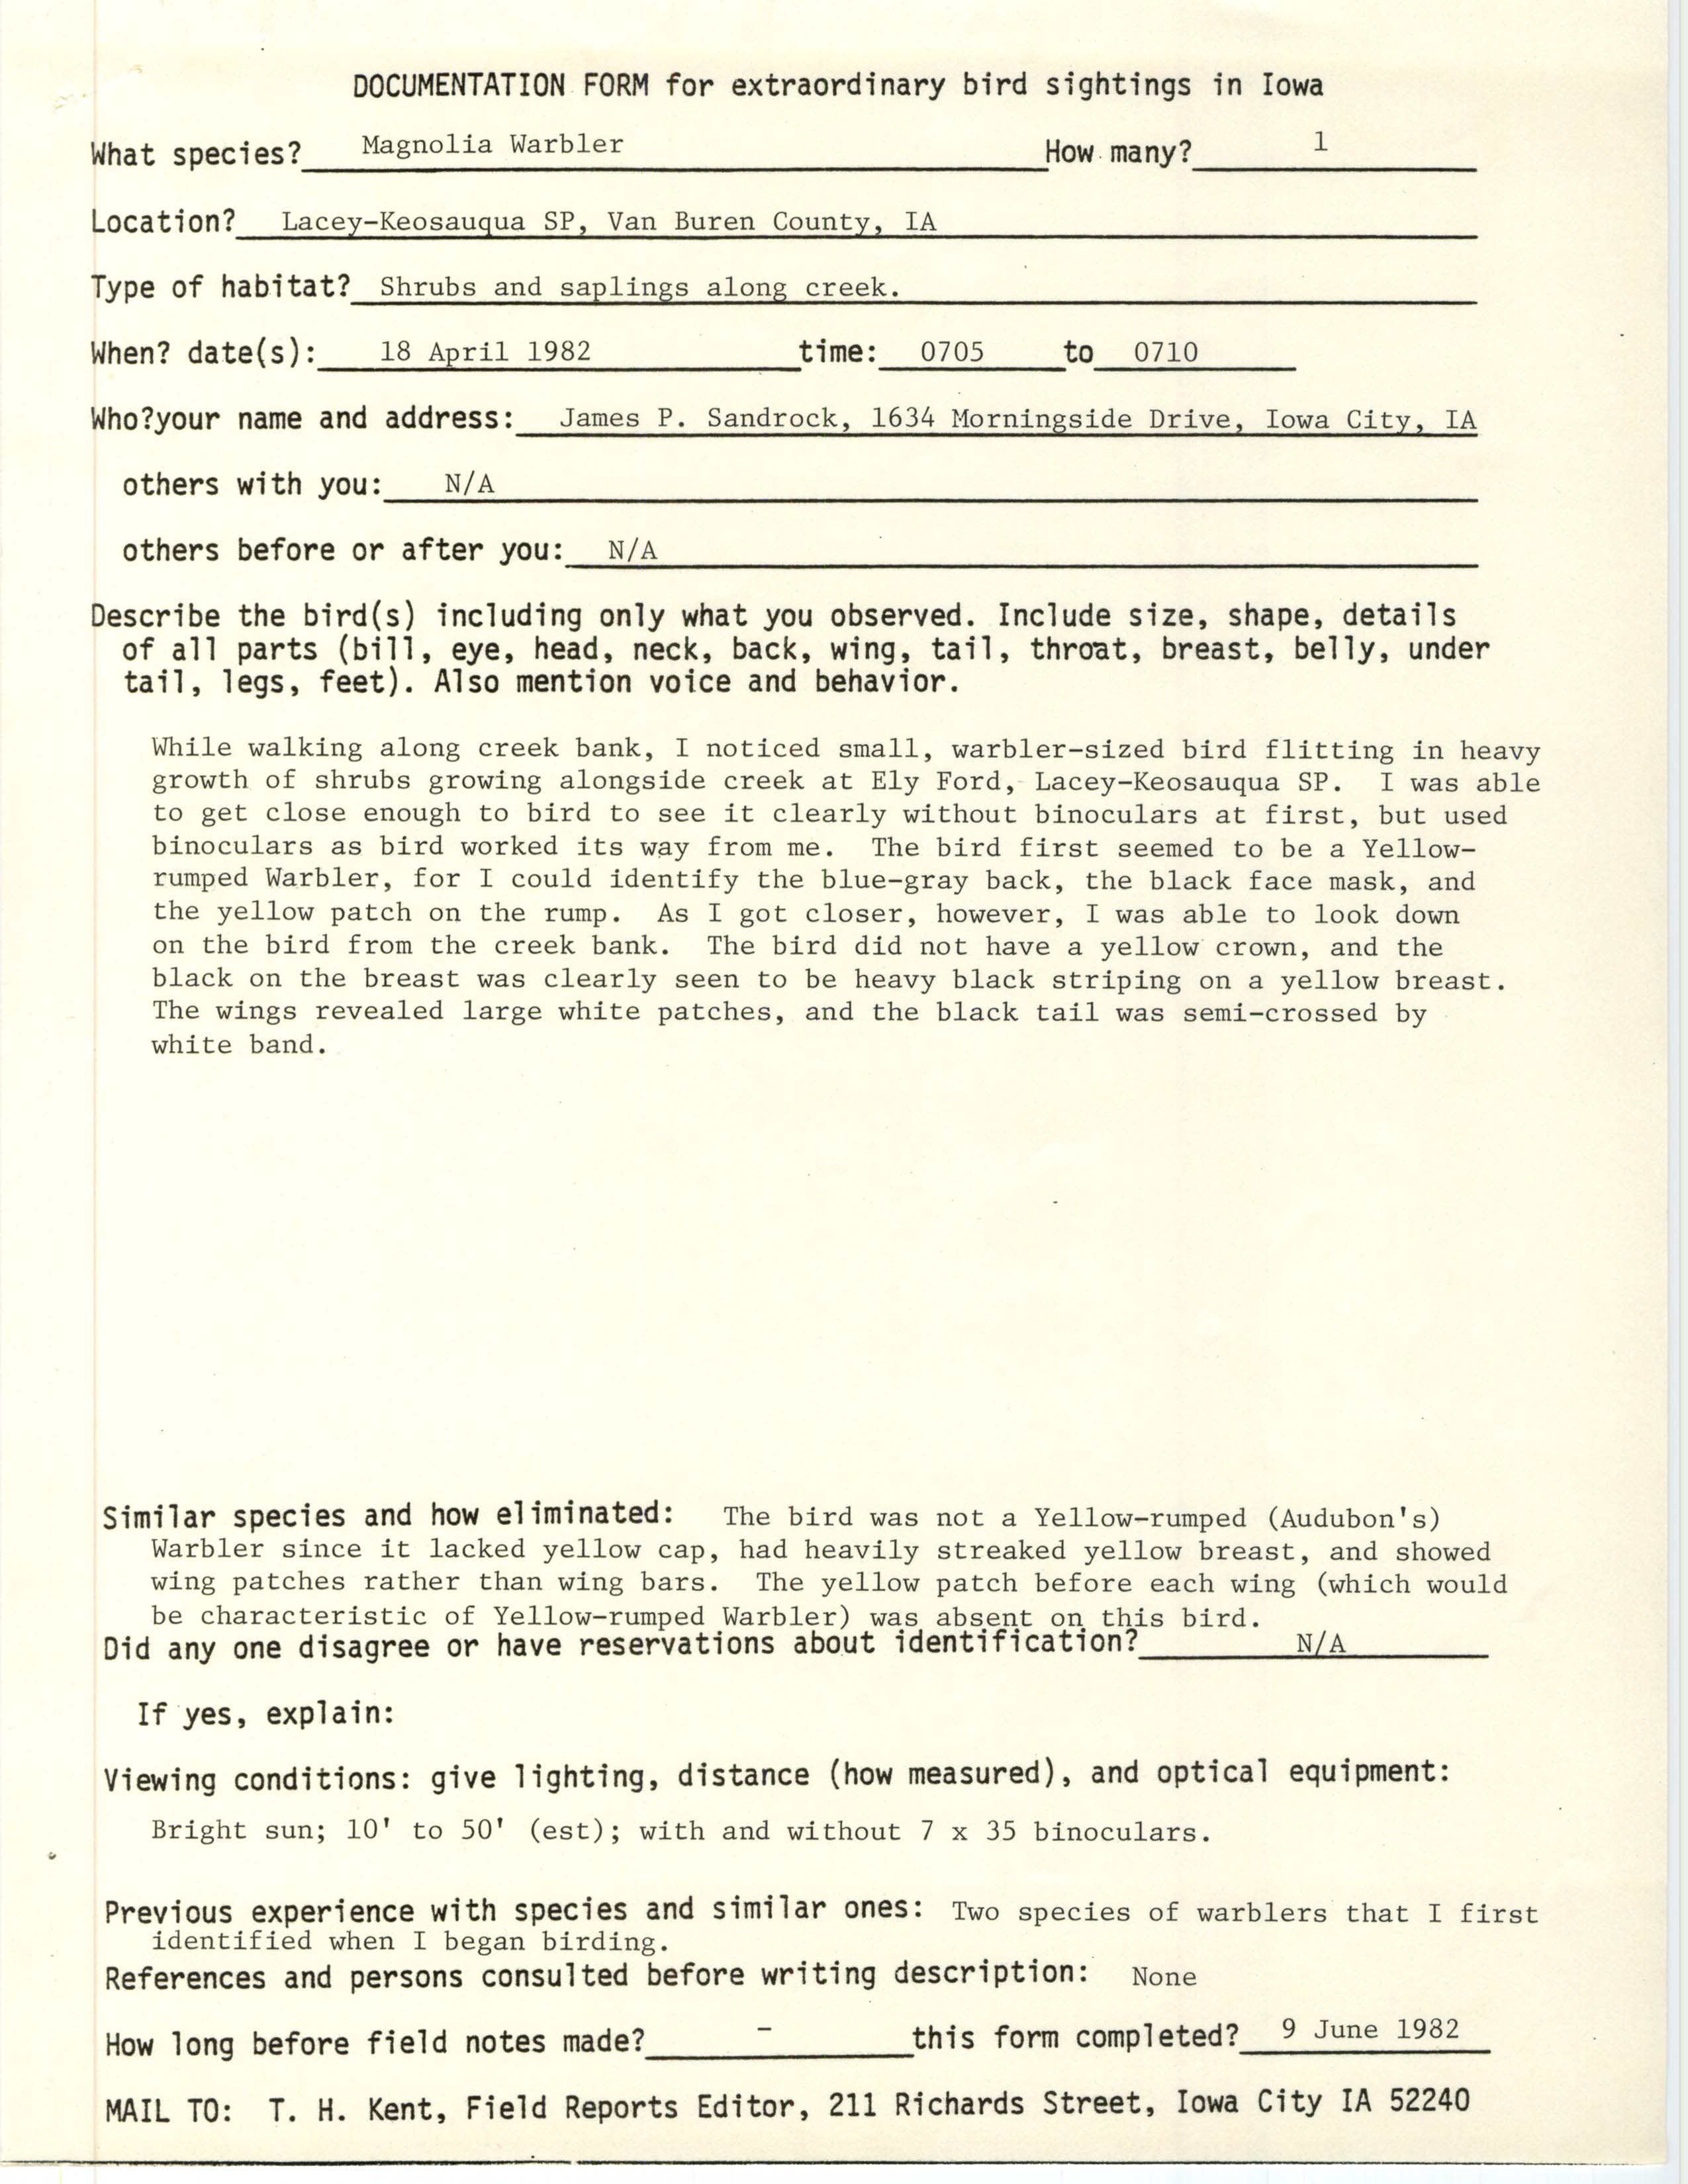 Rare bird documentation form for Magnolia Warbler at Lacey-Keosauqua State Park, 1982